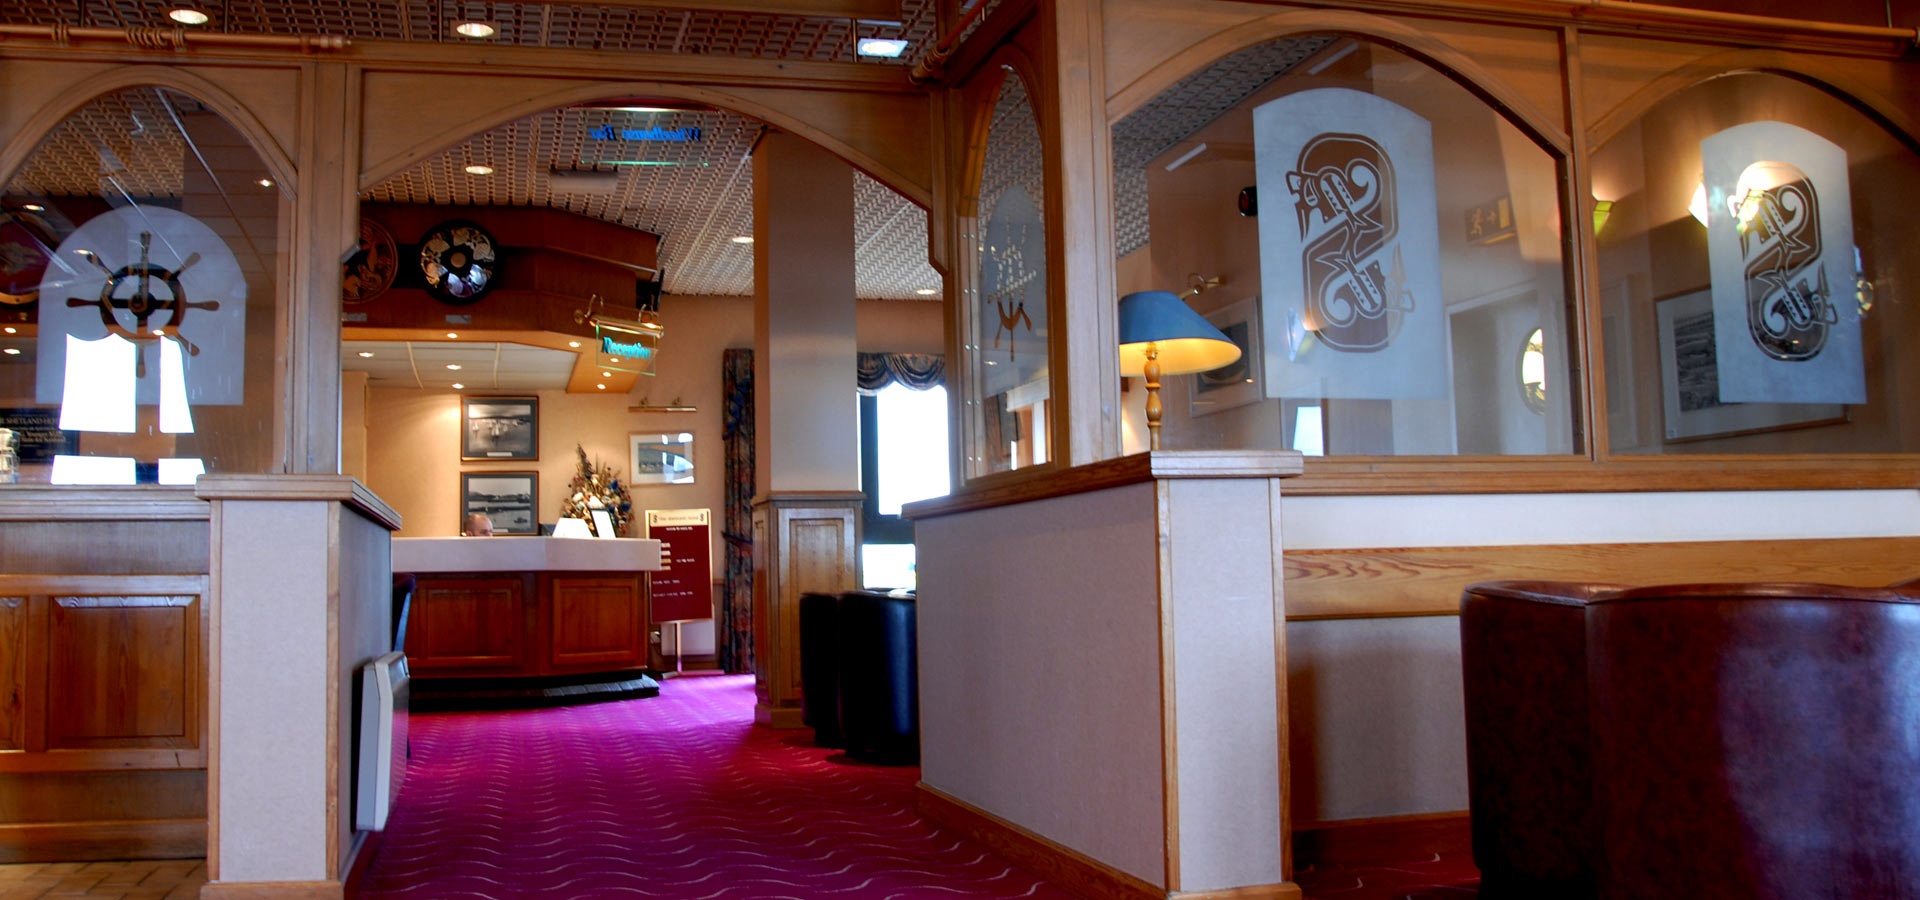 Craighaar Hotel Restaurant, Club Lounge and Bar